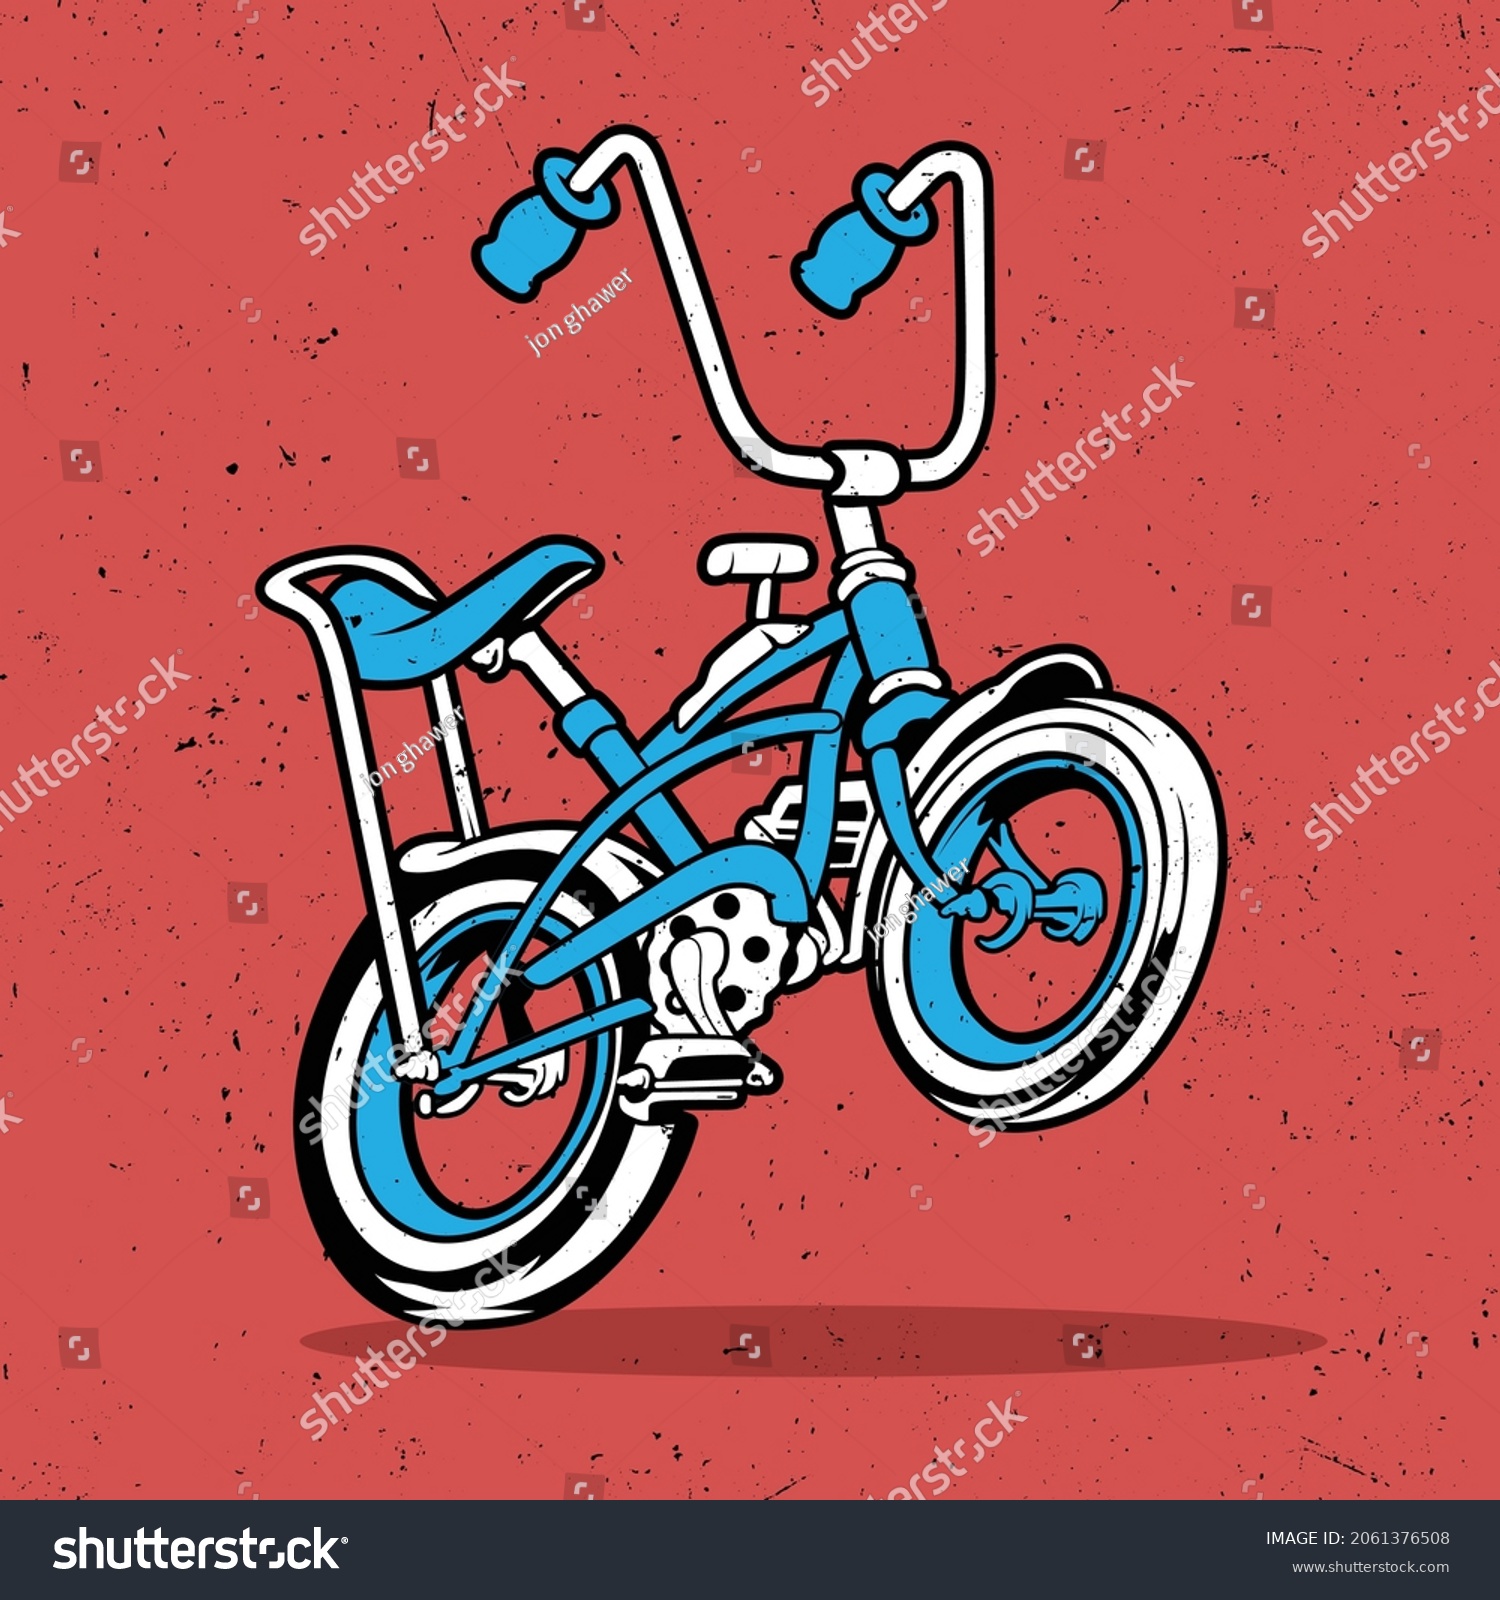 SVG of blue low rider bike in red background vintage free vector svg